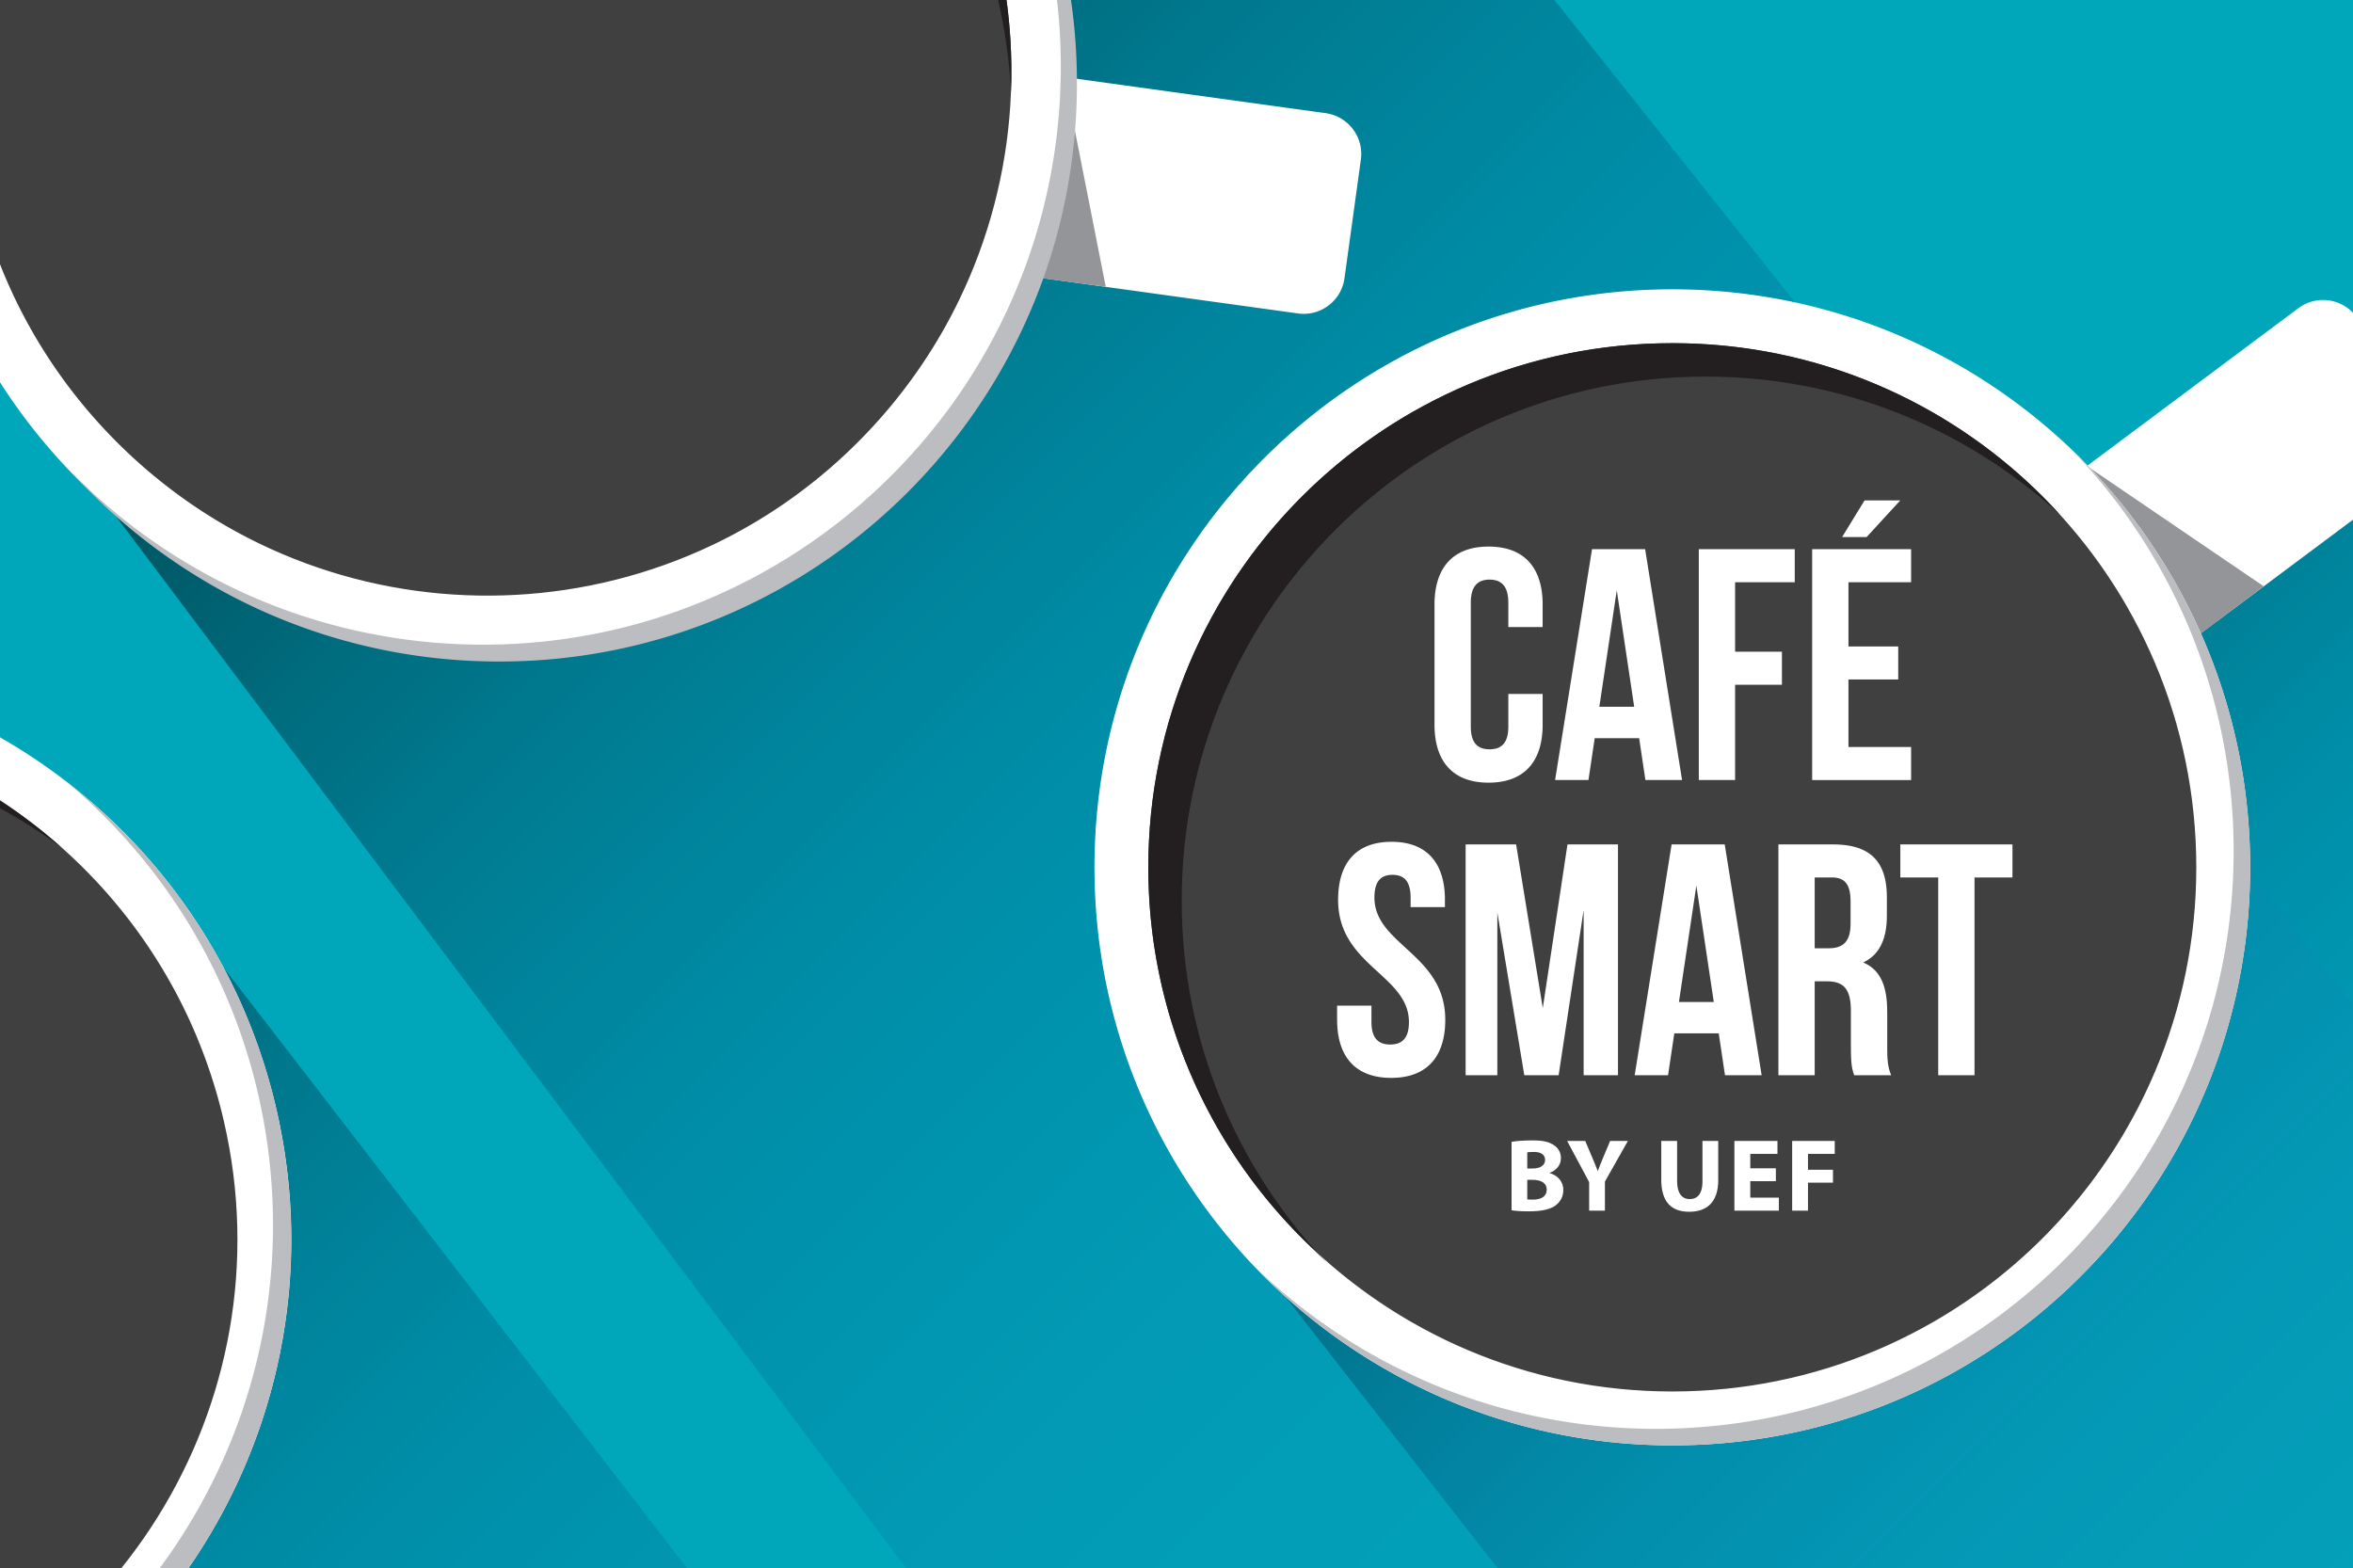 Café Smart by UEF